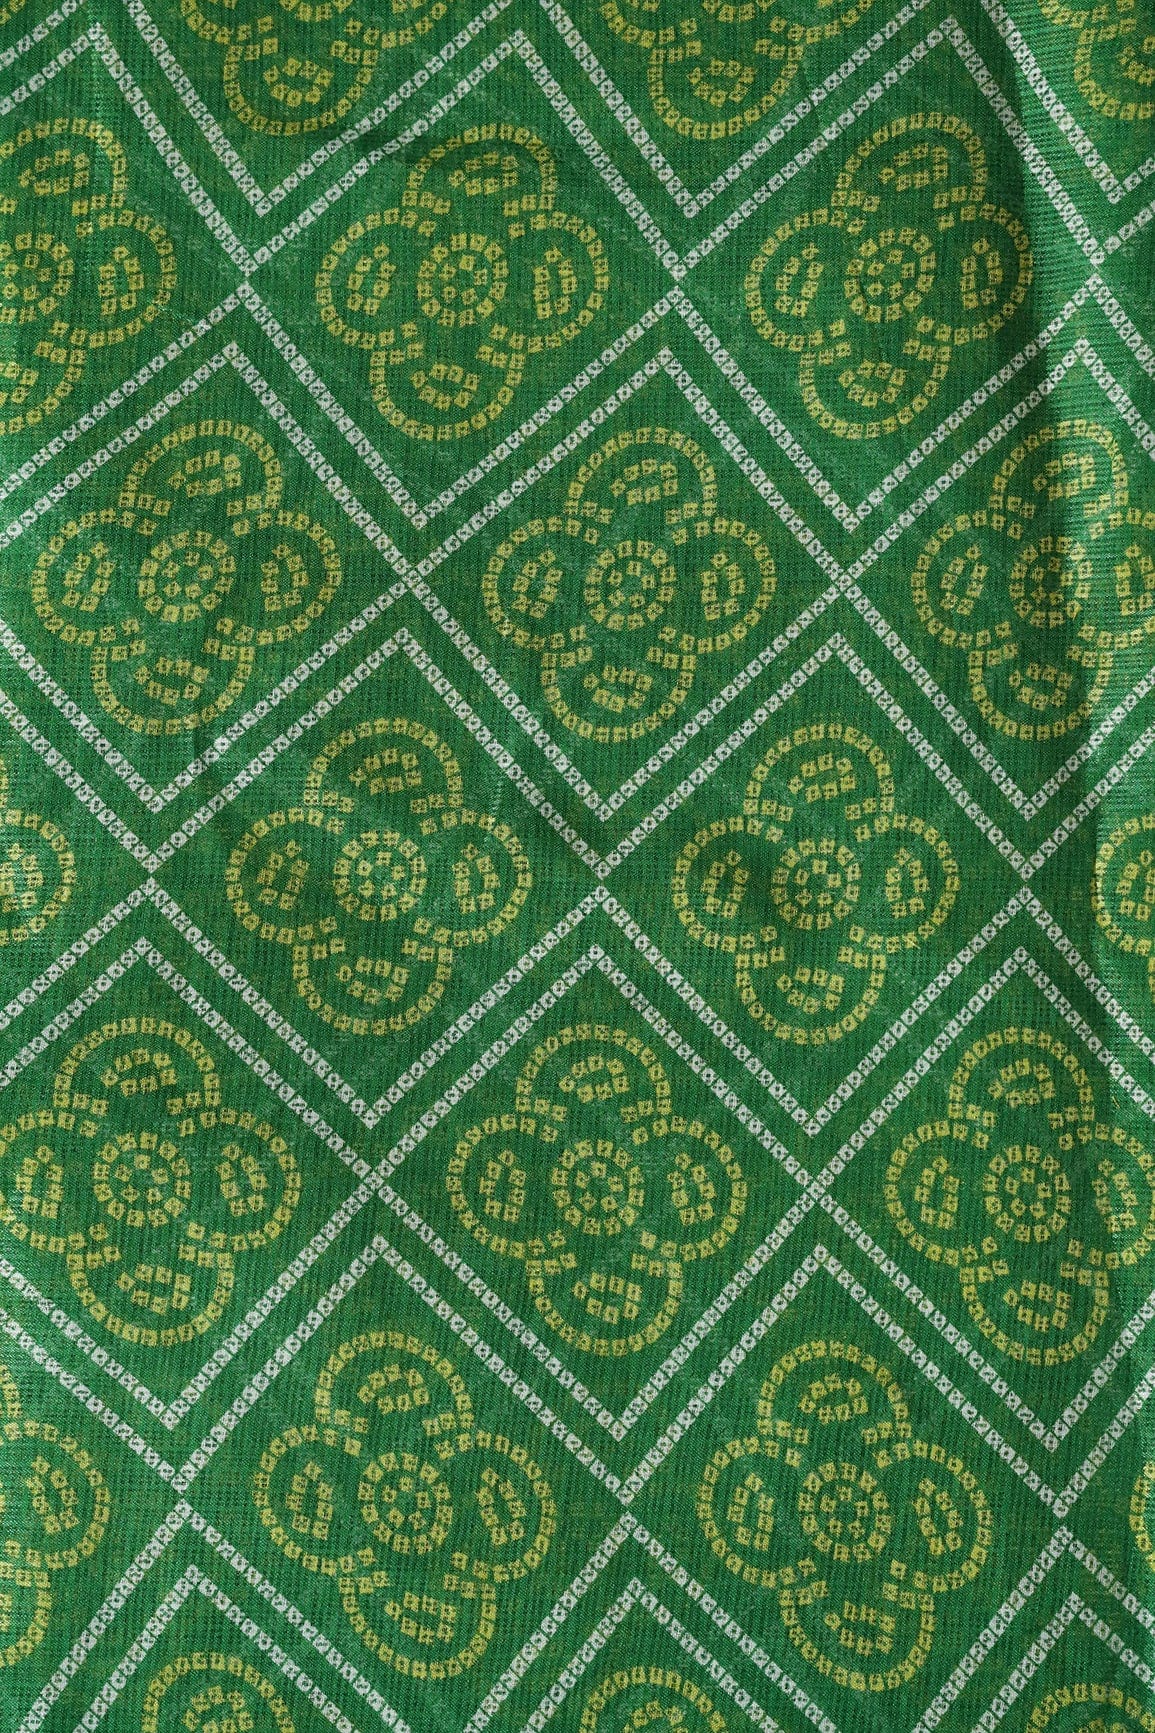 doeraa Prints White And Yellow Bandhani Print On Green Kota Doria Fabric